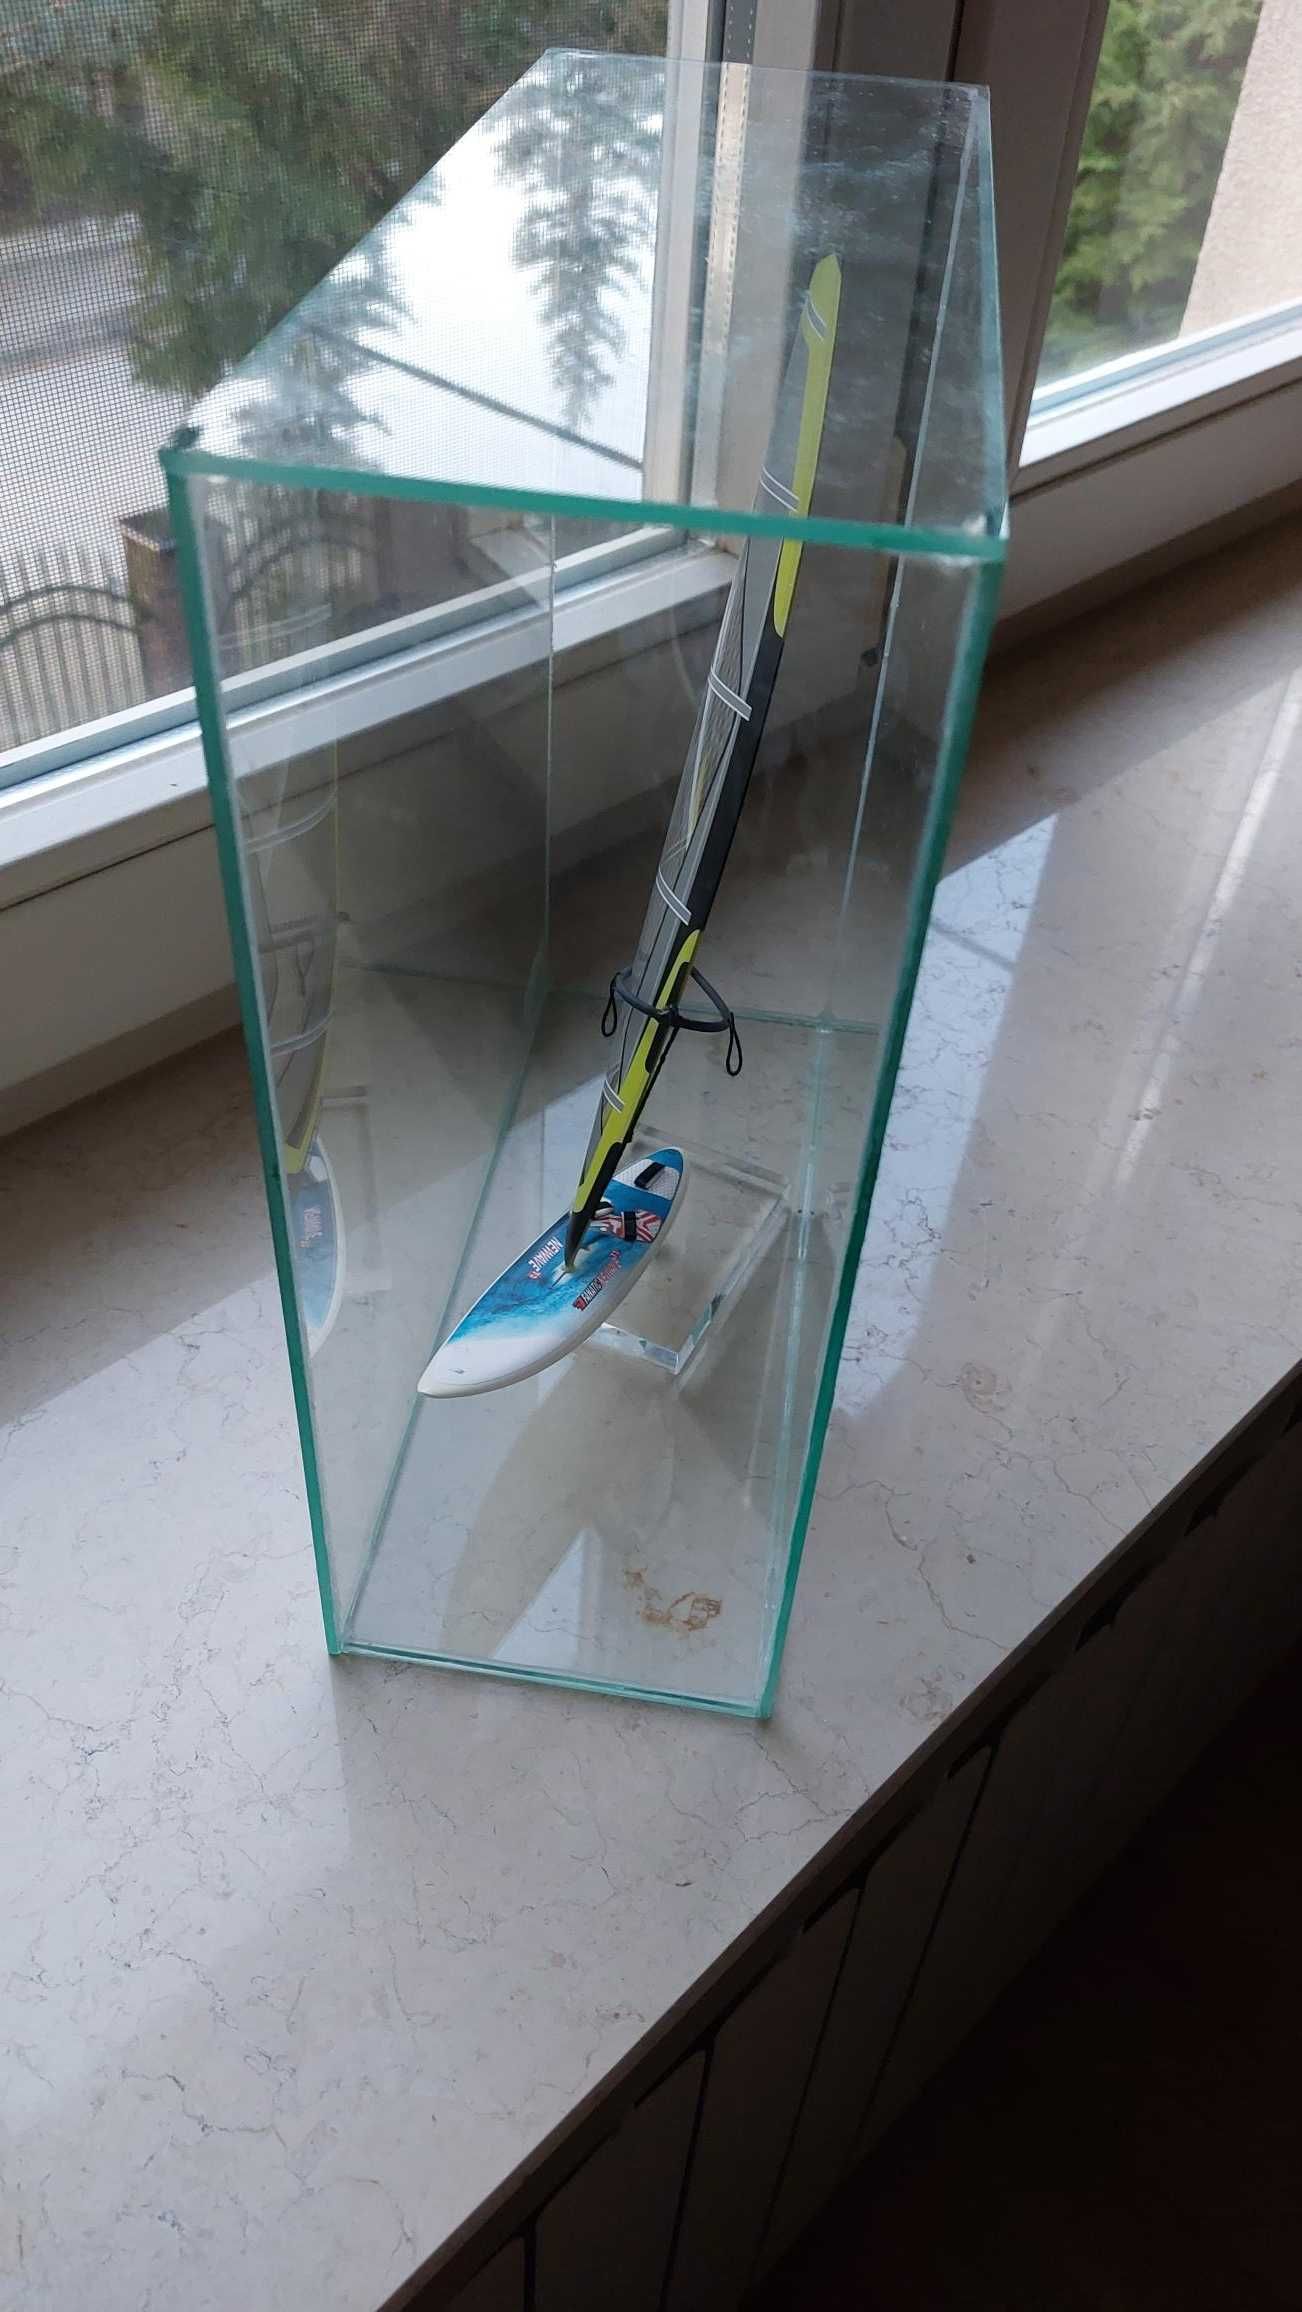 Model deski windsurfing